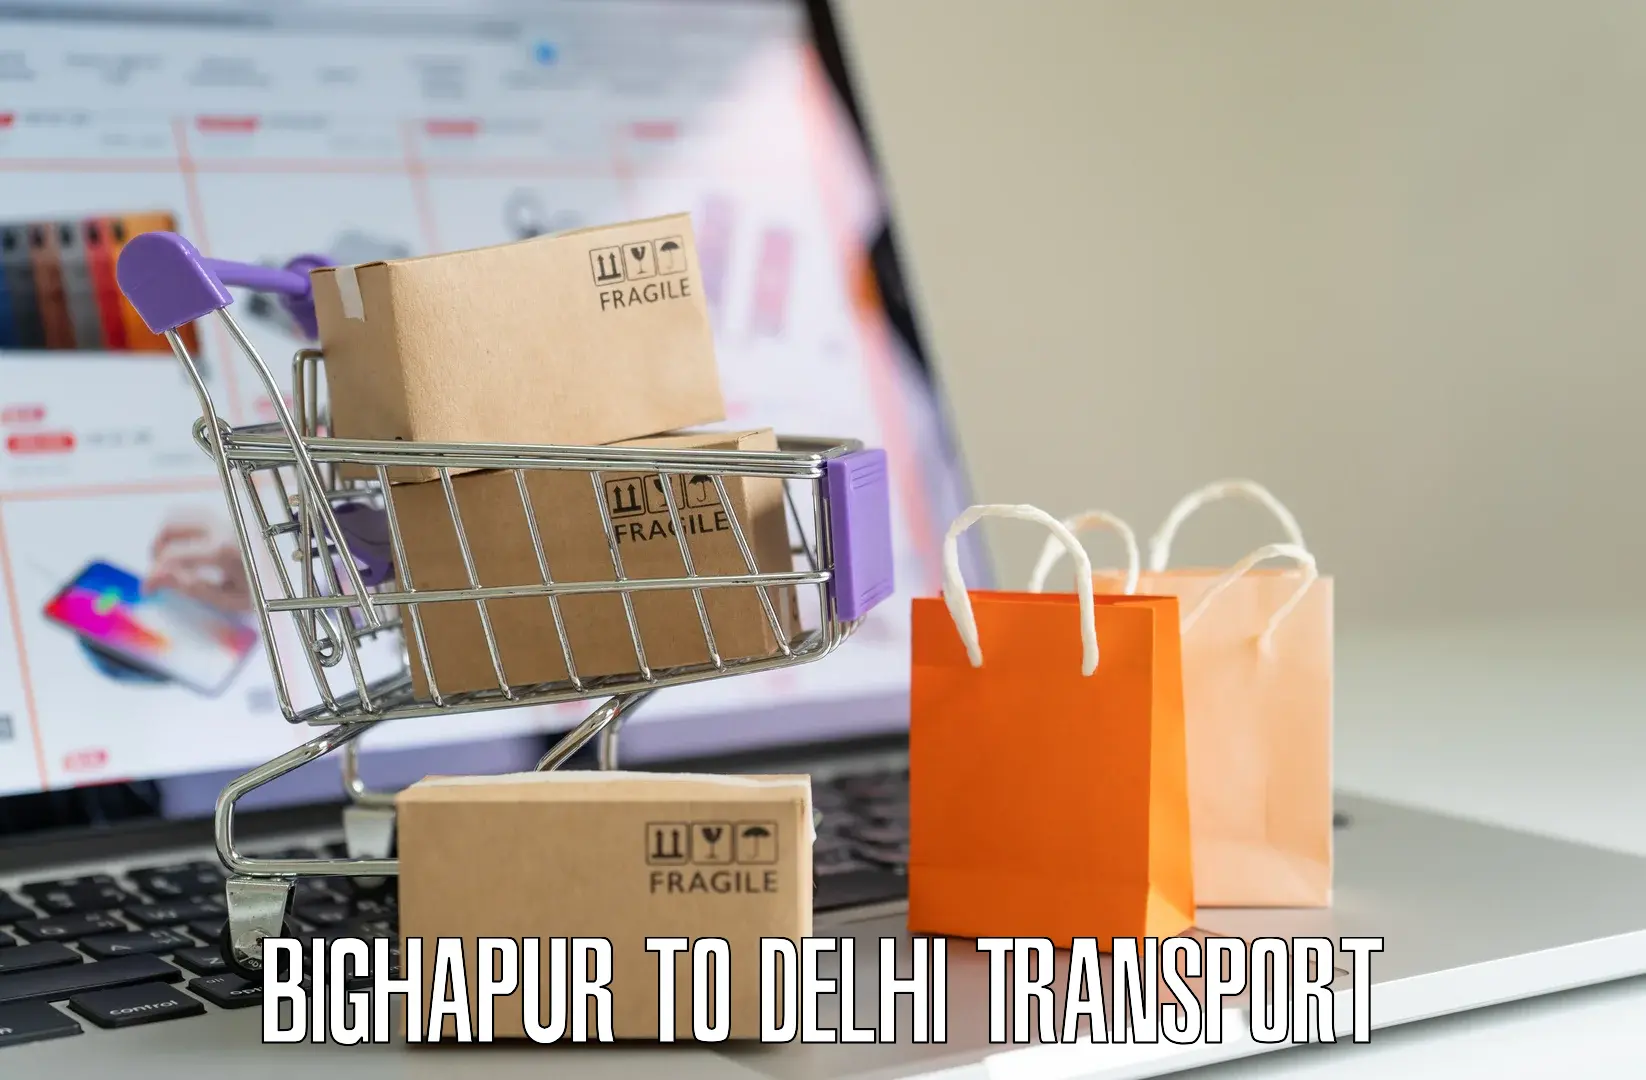 Commercial transport service Bighapur to NIT Delhi